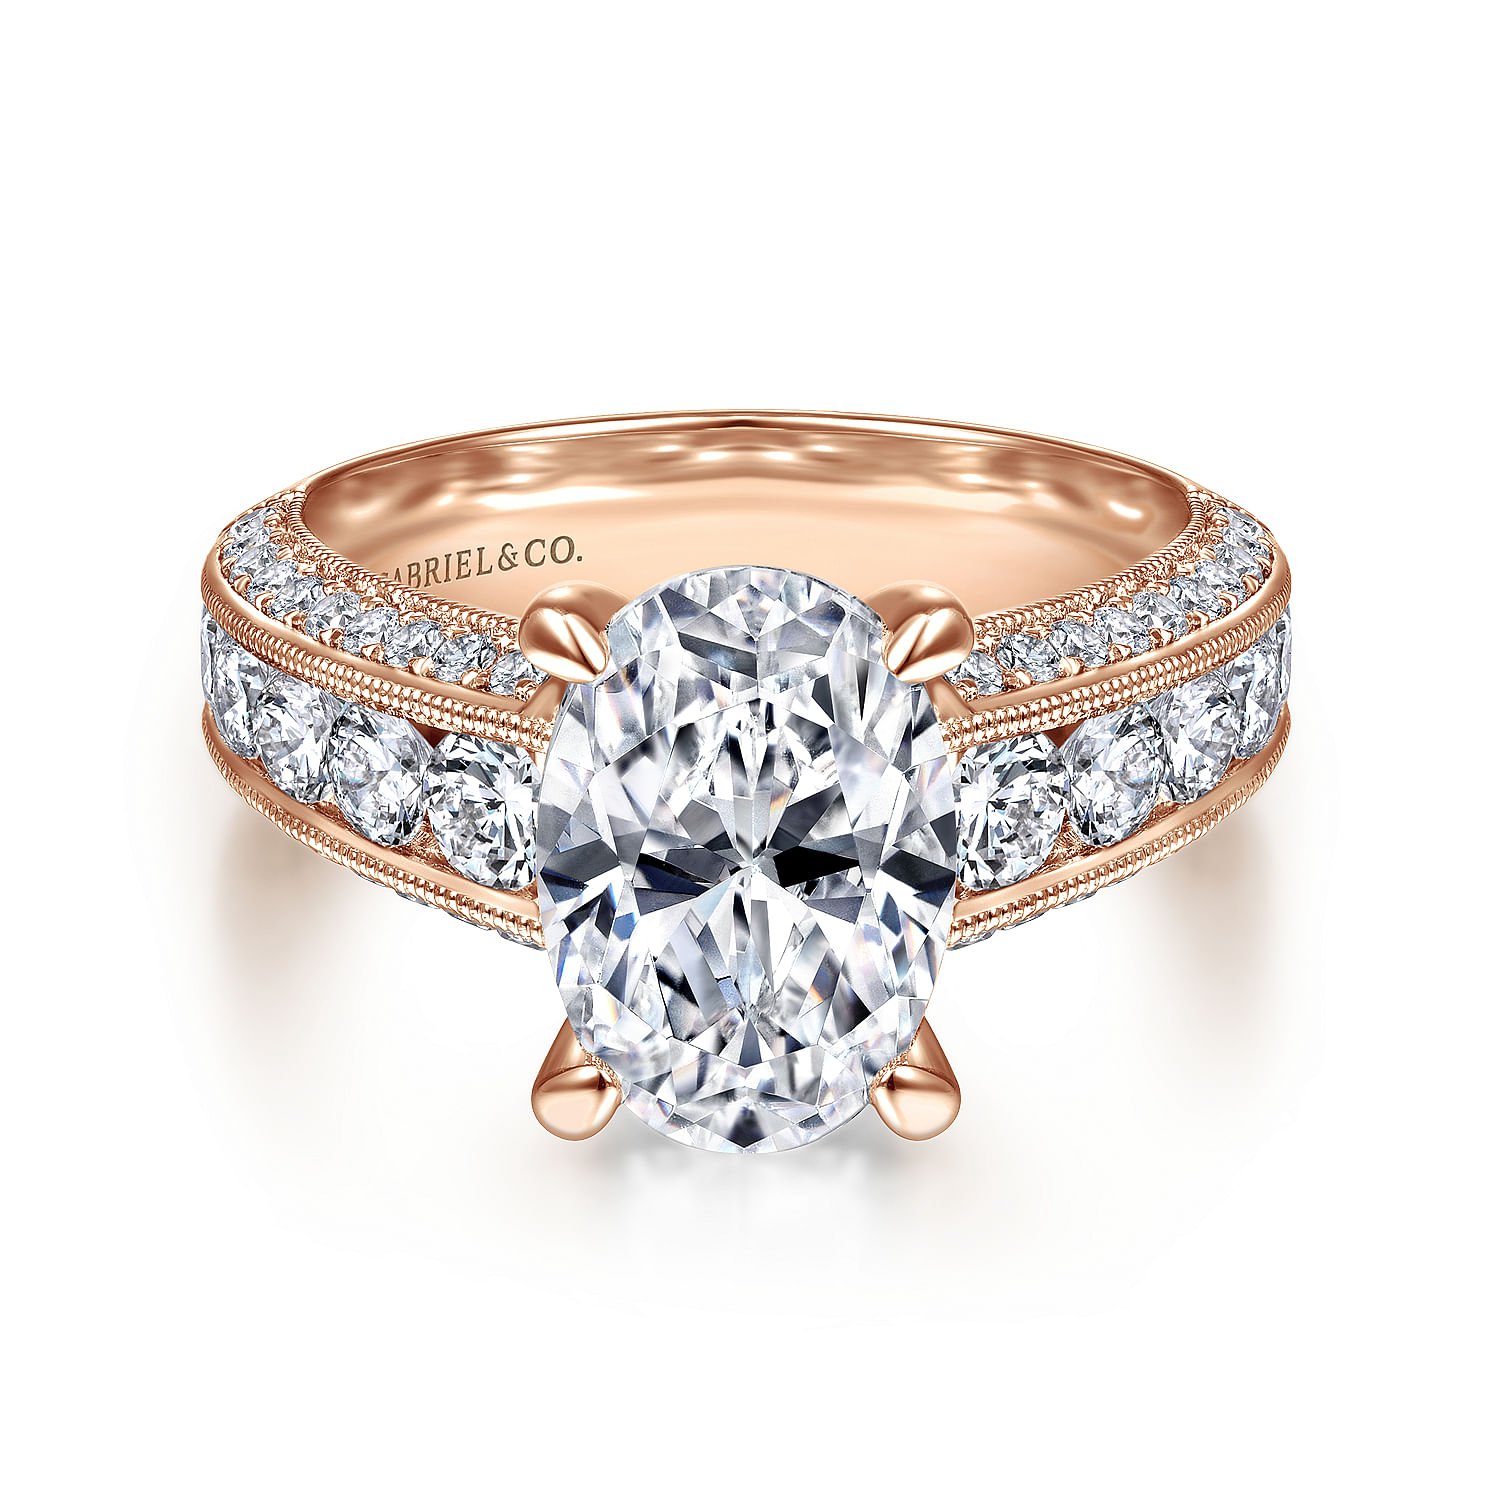 Gabriel - Vintage Inspired 14K Rose Gold Wide Band Oval Diamond Channel Set Engagement Ring